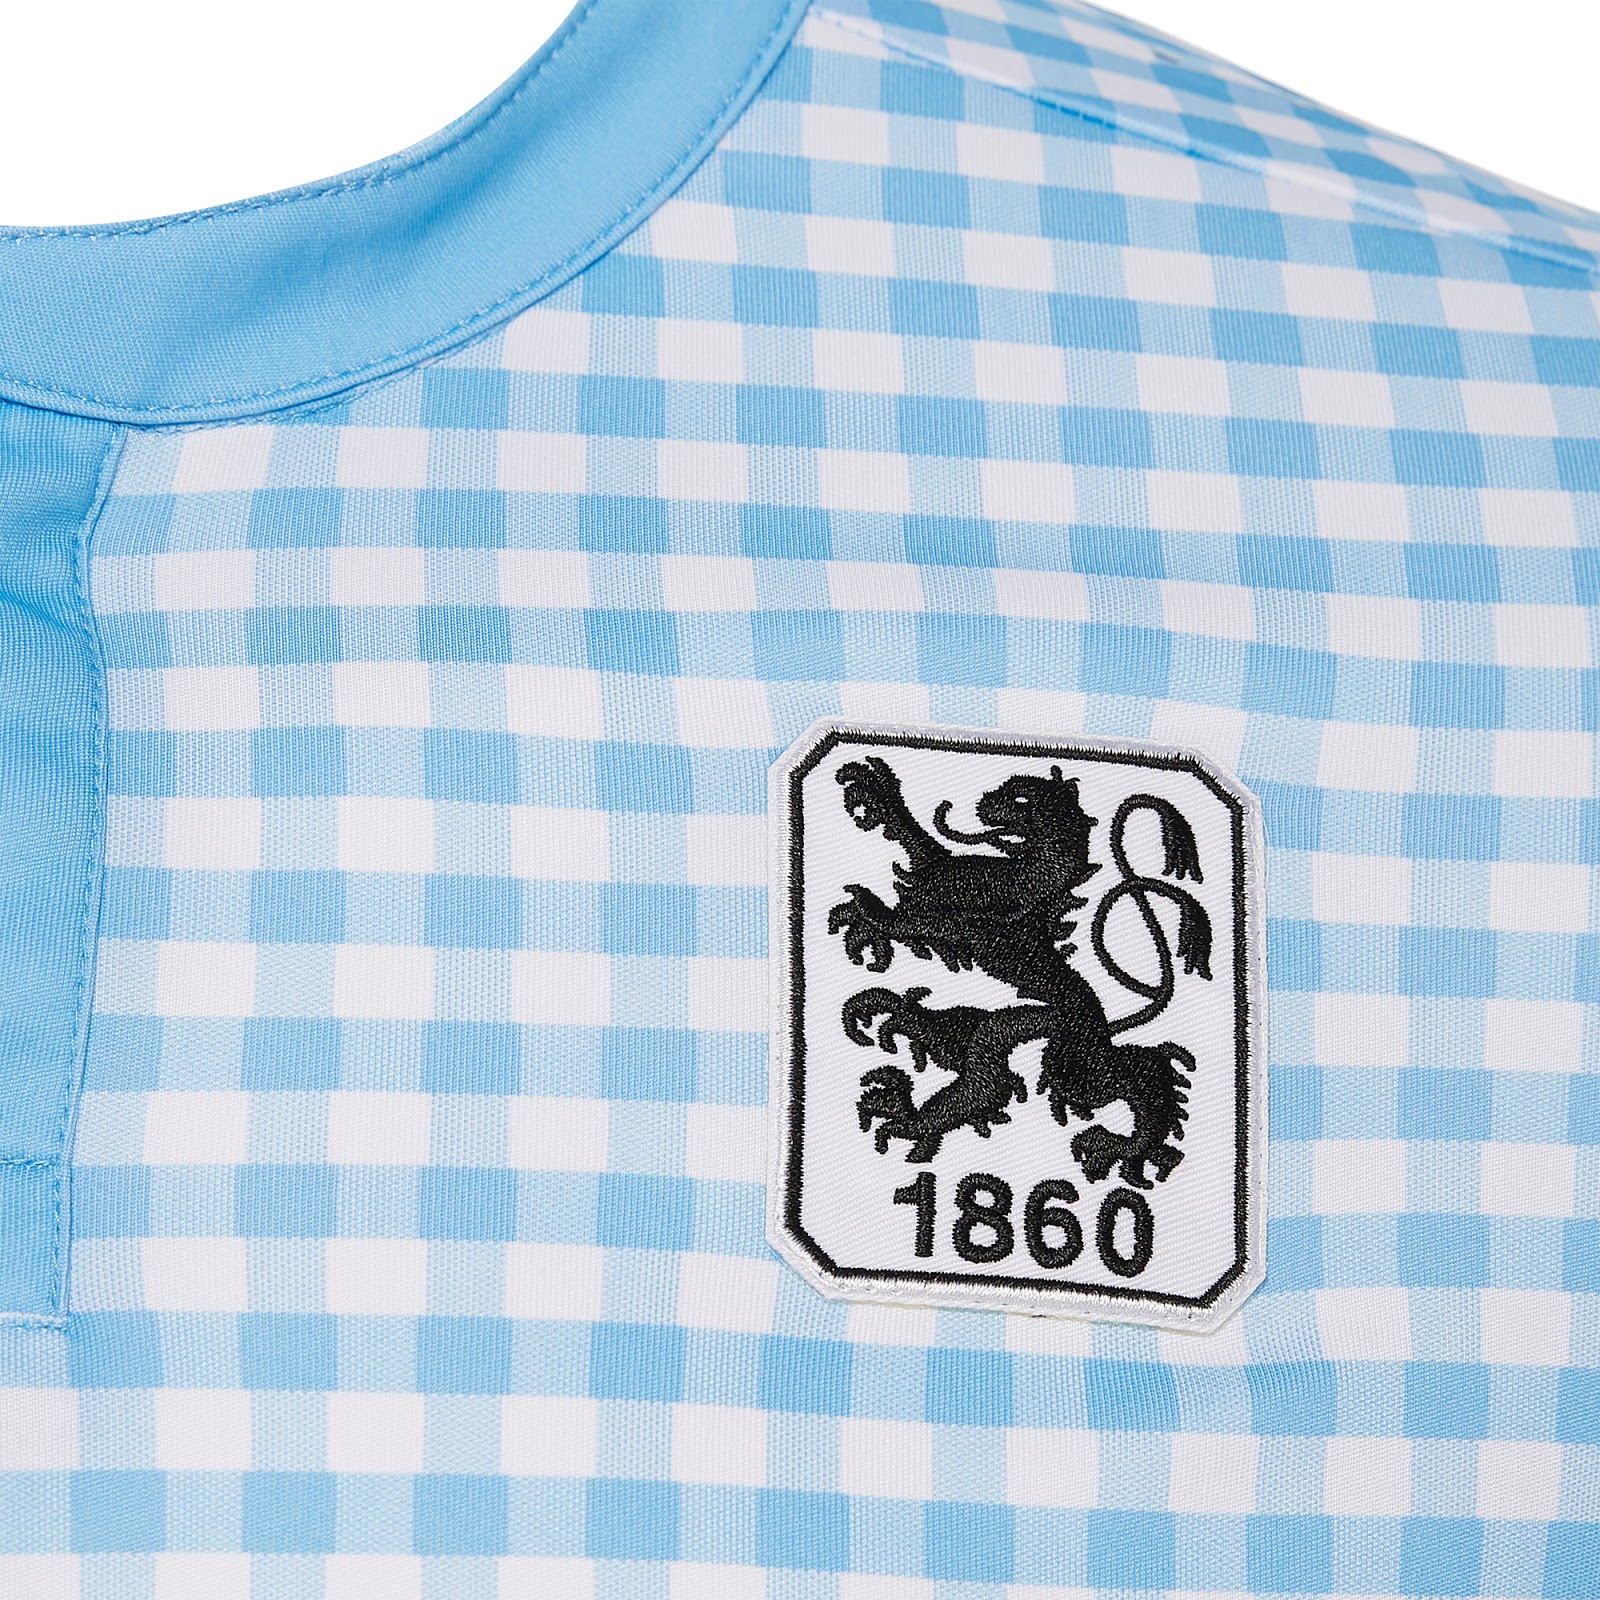 Macron apresenta camisa do 1860 München para a Oktoberfest - Show de Camisas